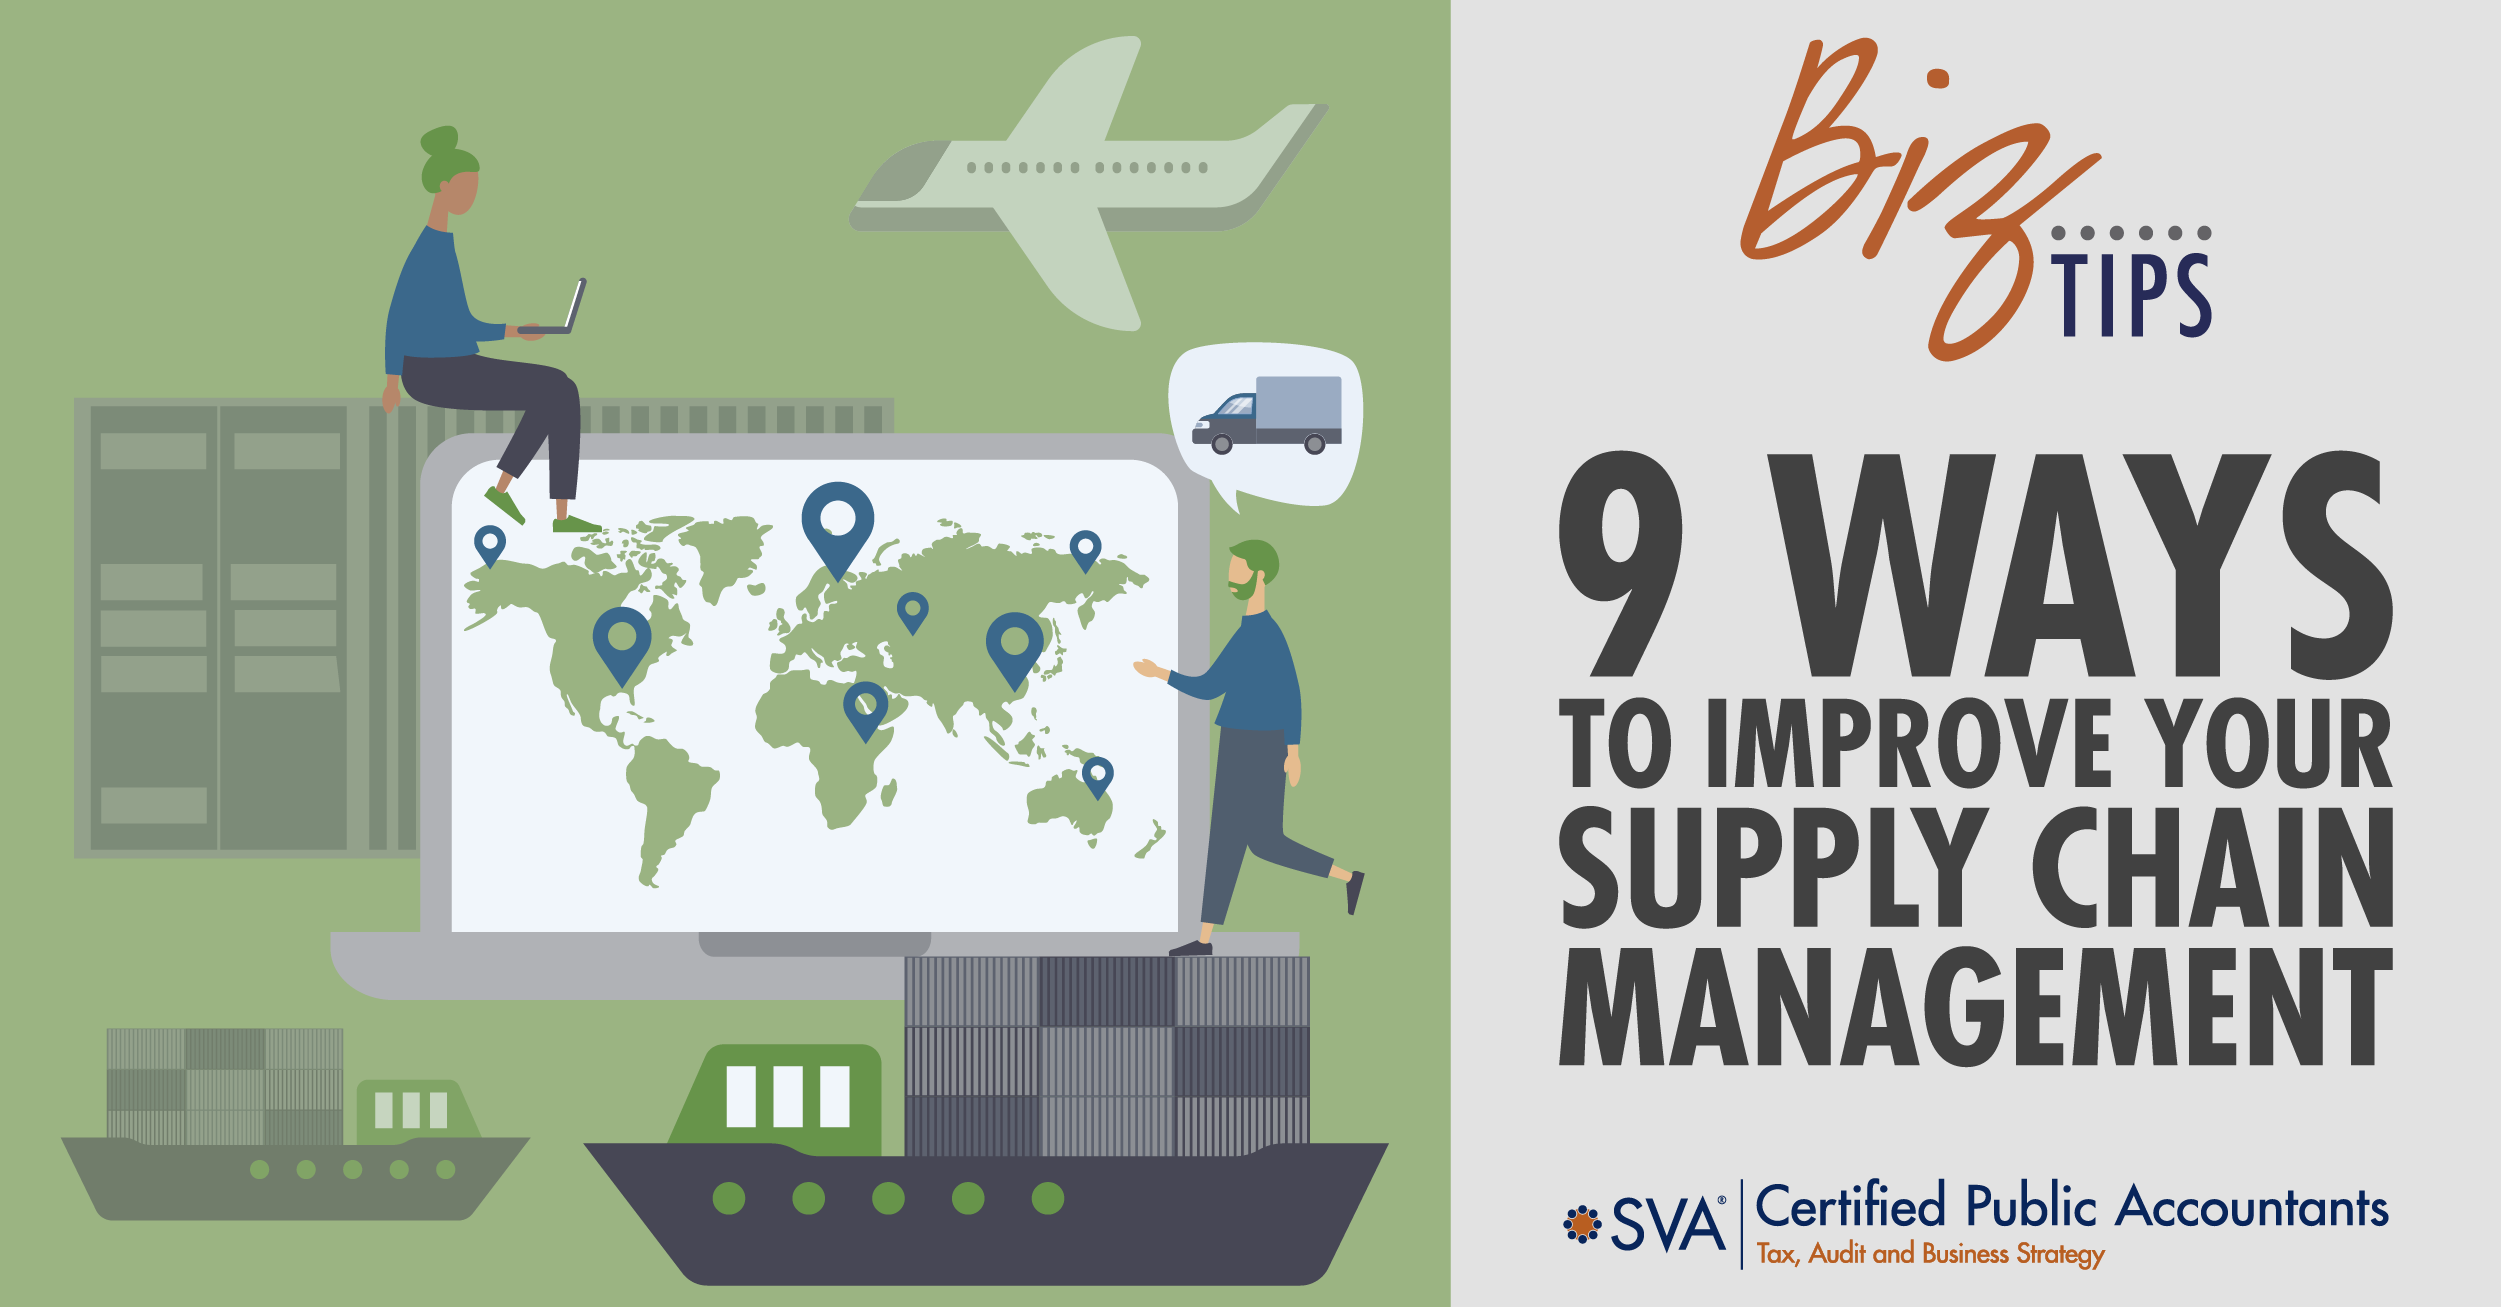 sva-certified-public-accountants-biz-tips-9-ways-to-imporve-your-supply-chain-management